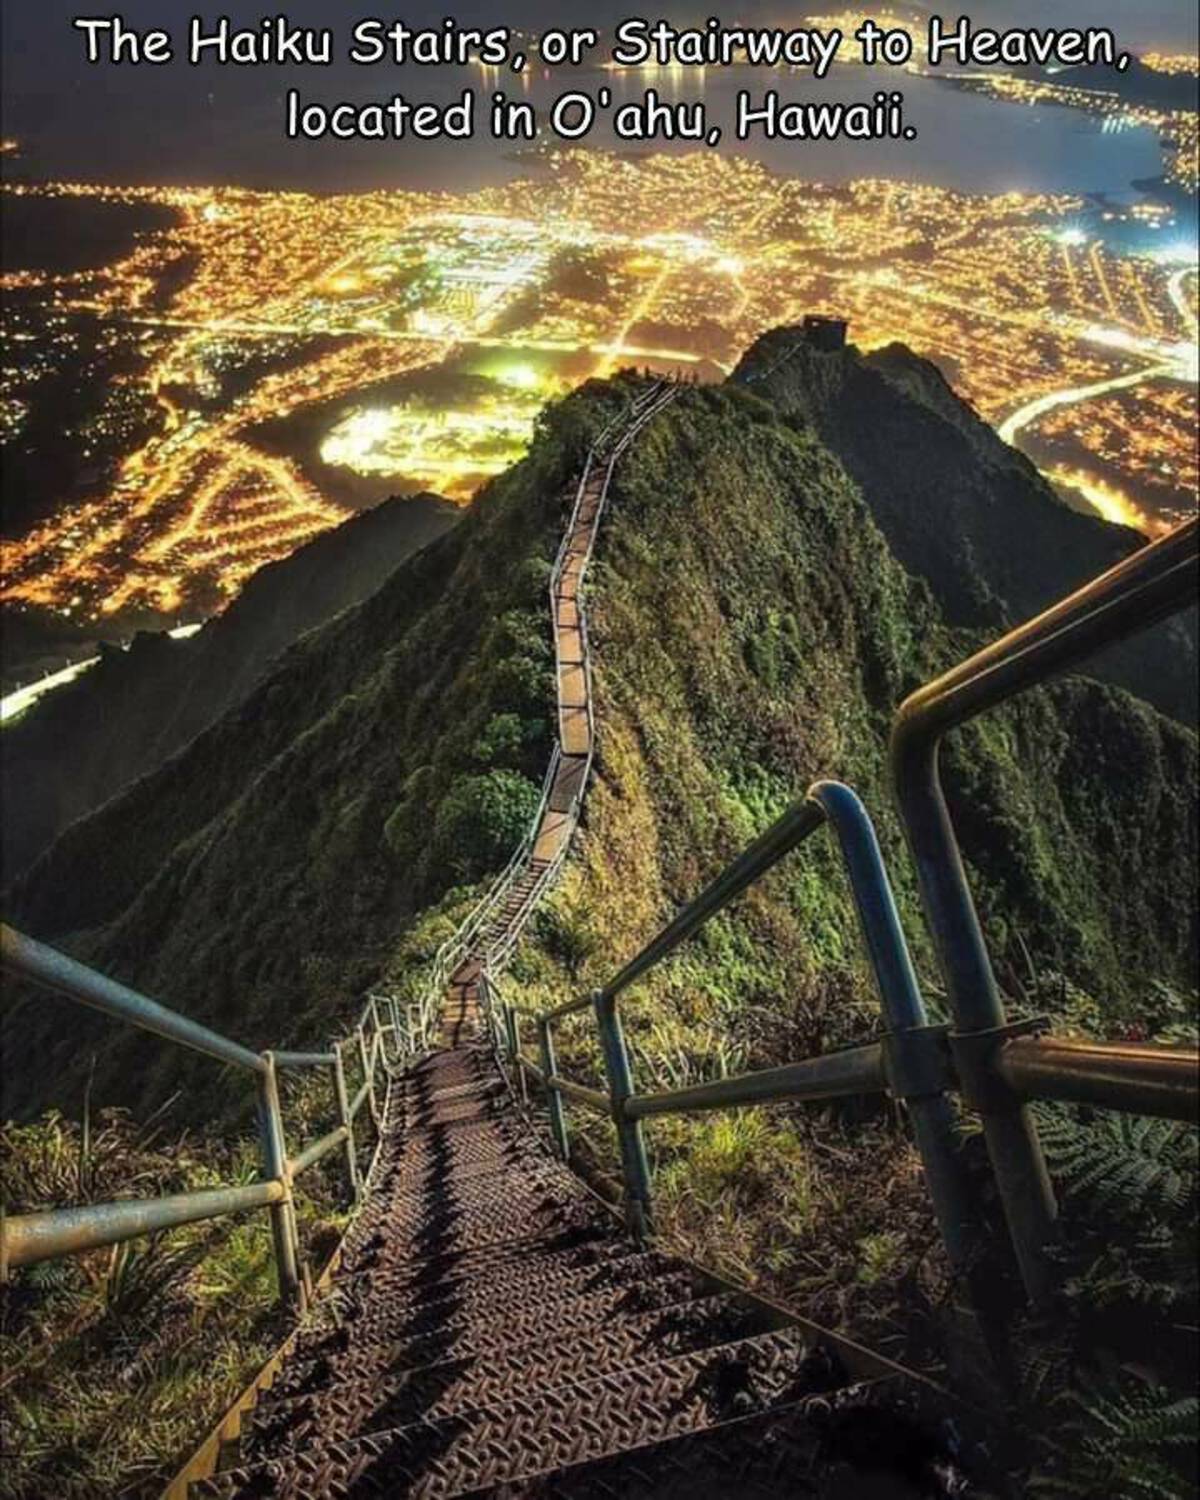 stairway to heaven night view - The Haiku Stairs, or Stairway to Heaven, located in O'ahu, Hawaii.